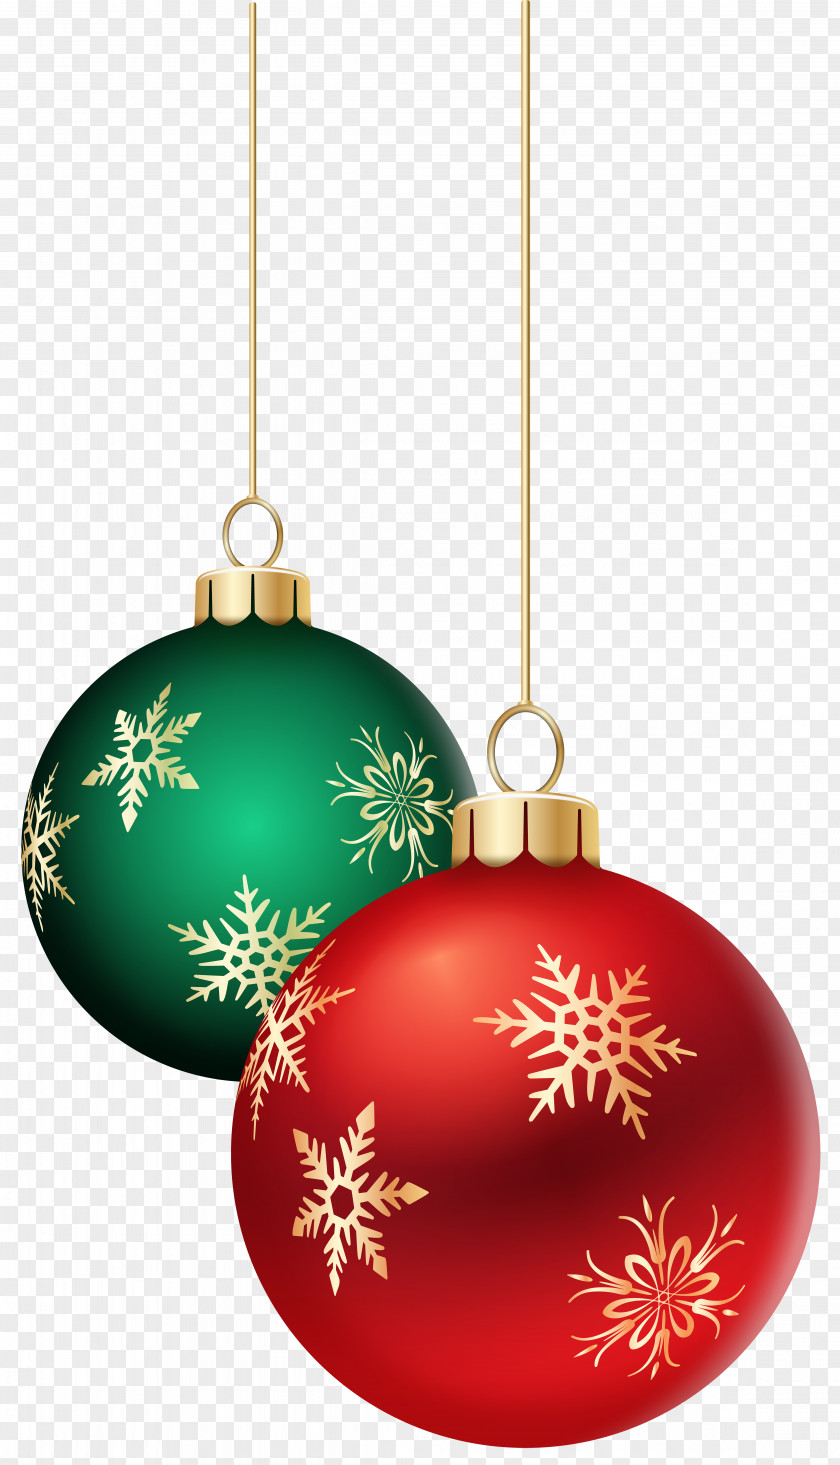 Hanging Christmas Balls Transparent Clip Art Image Ornament Decoration Lights PNG